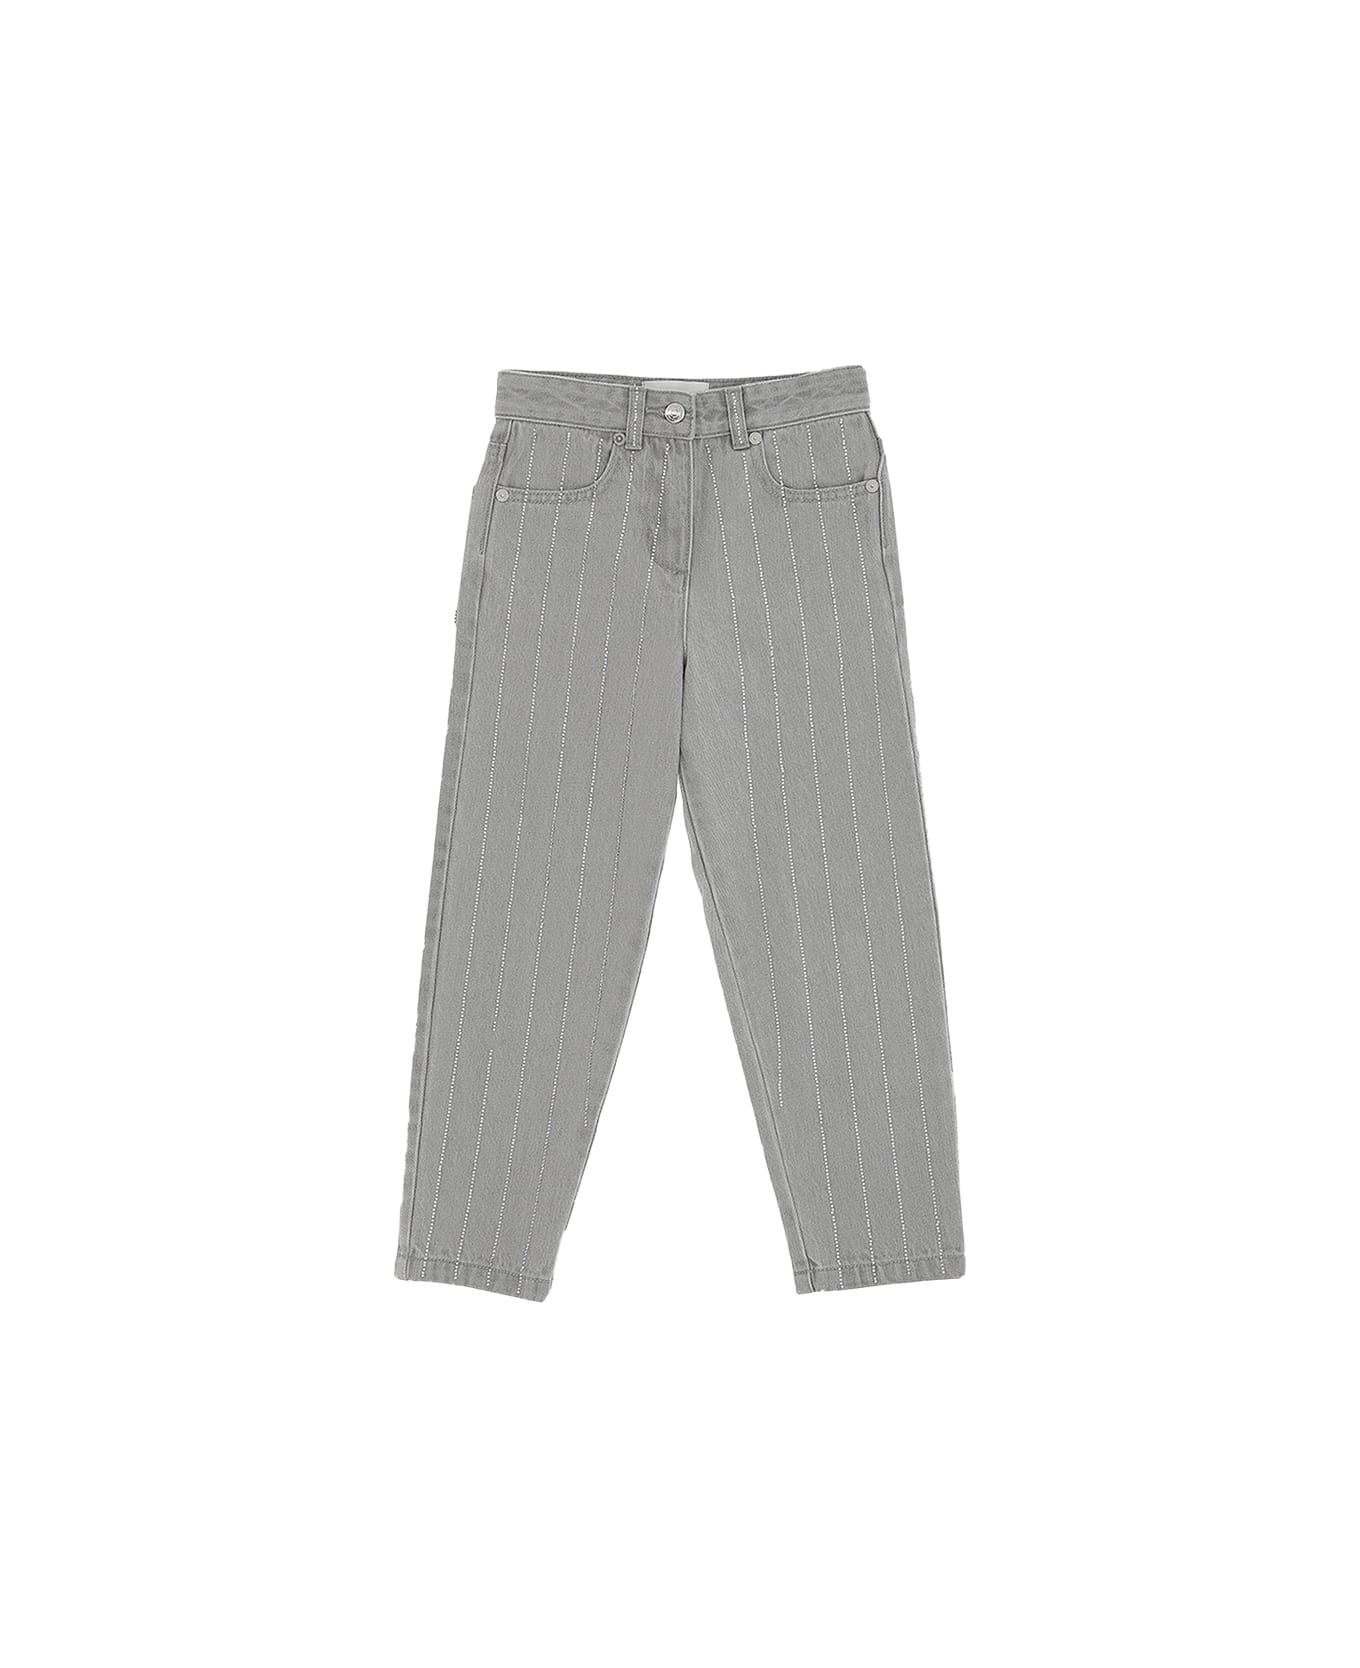 Ermanno Scervino Junior Grey Jeans With Rhinestone Pinstripe Effect - Grey